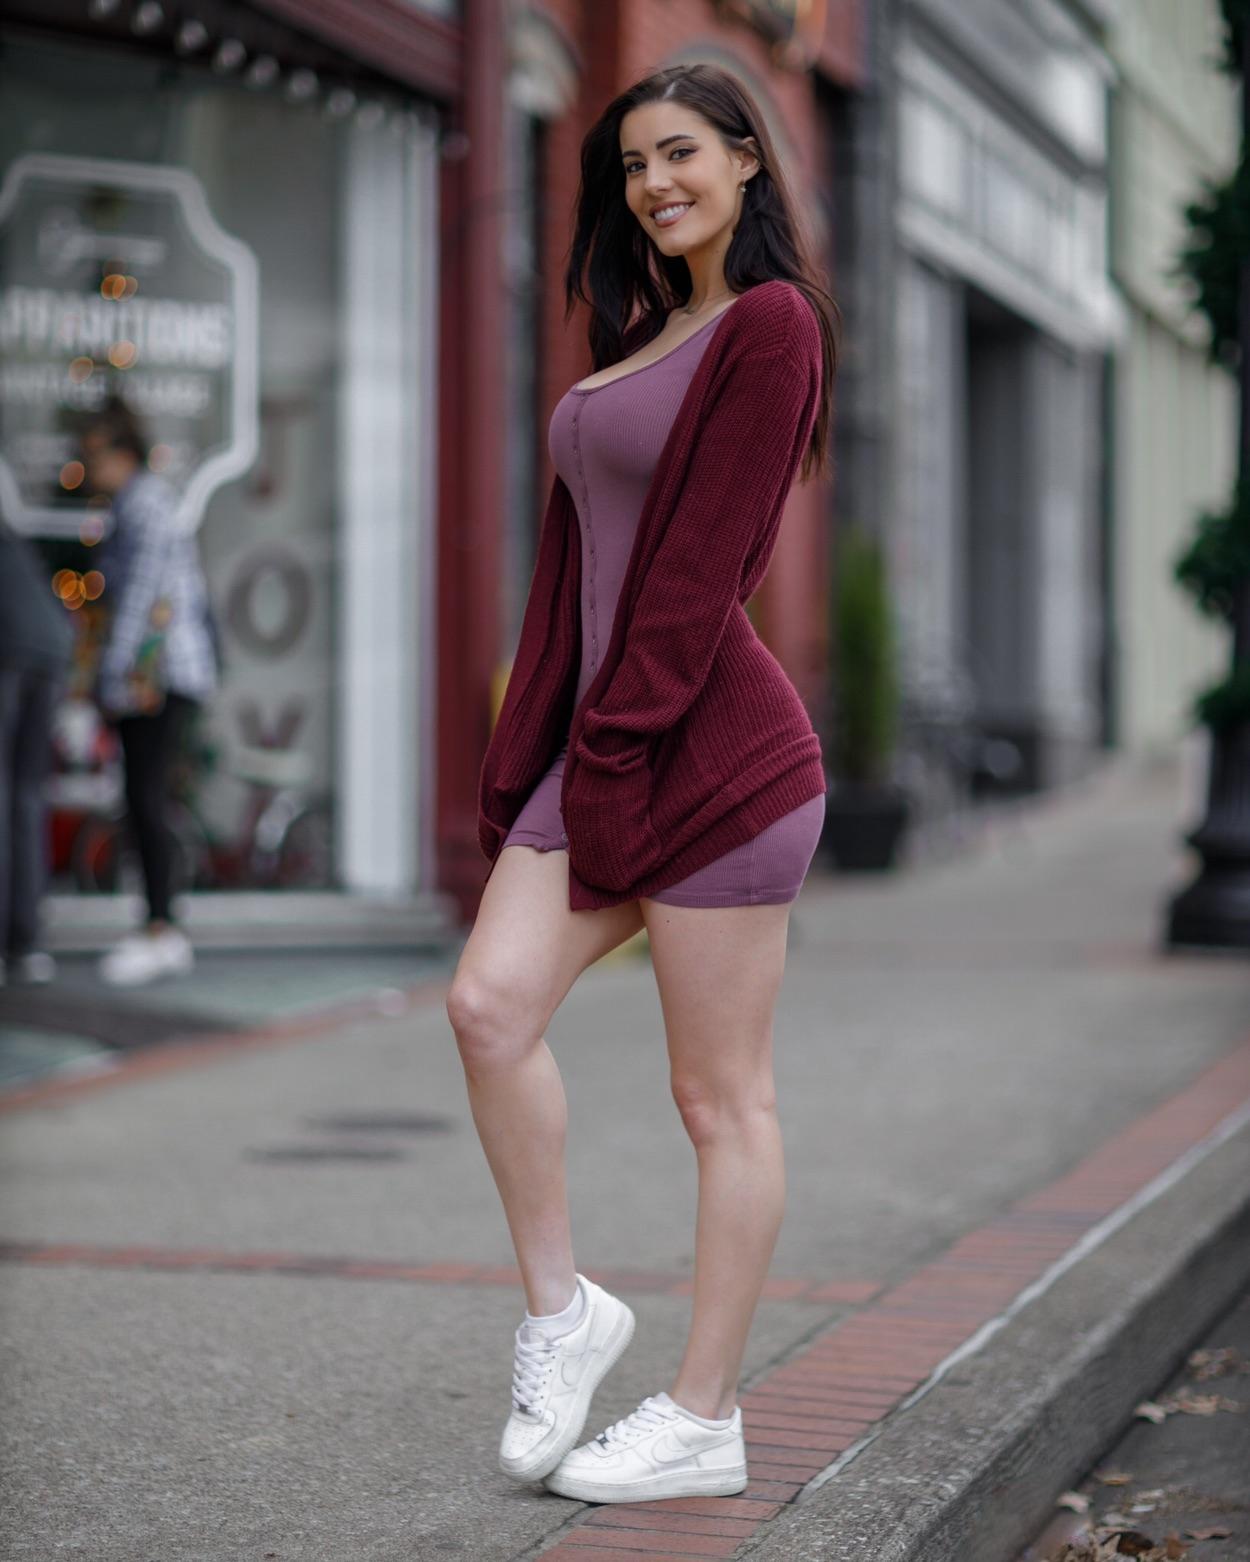 Erin Olash Sexy Tight Dress Photoshoot Leaked 19